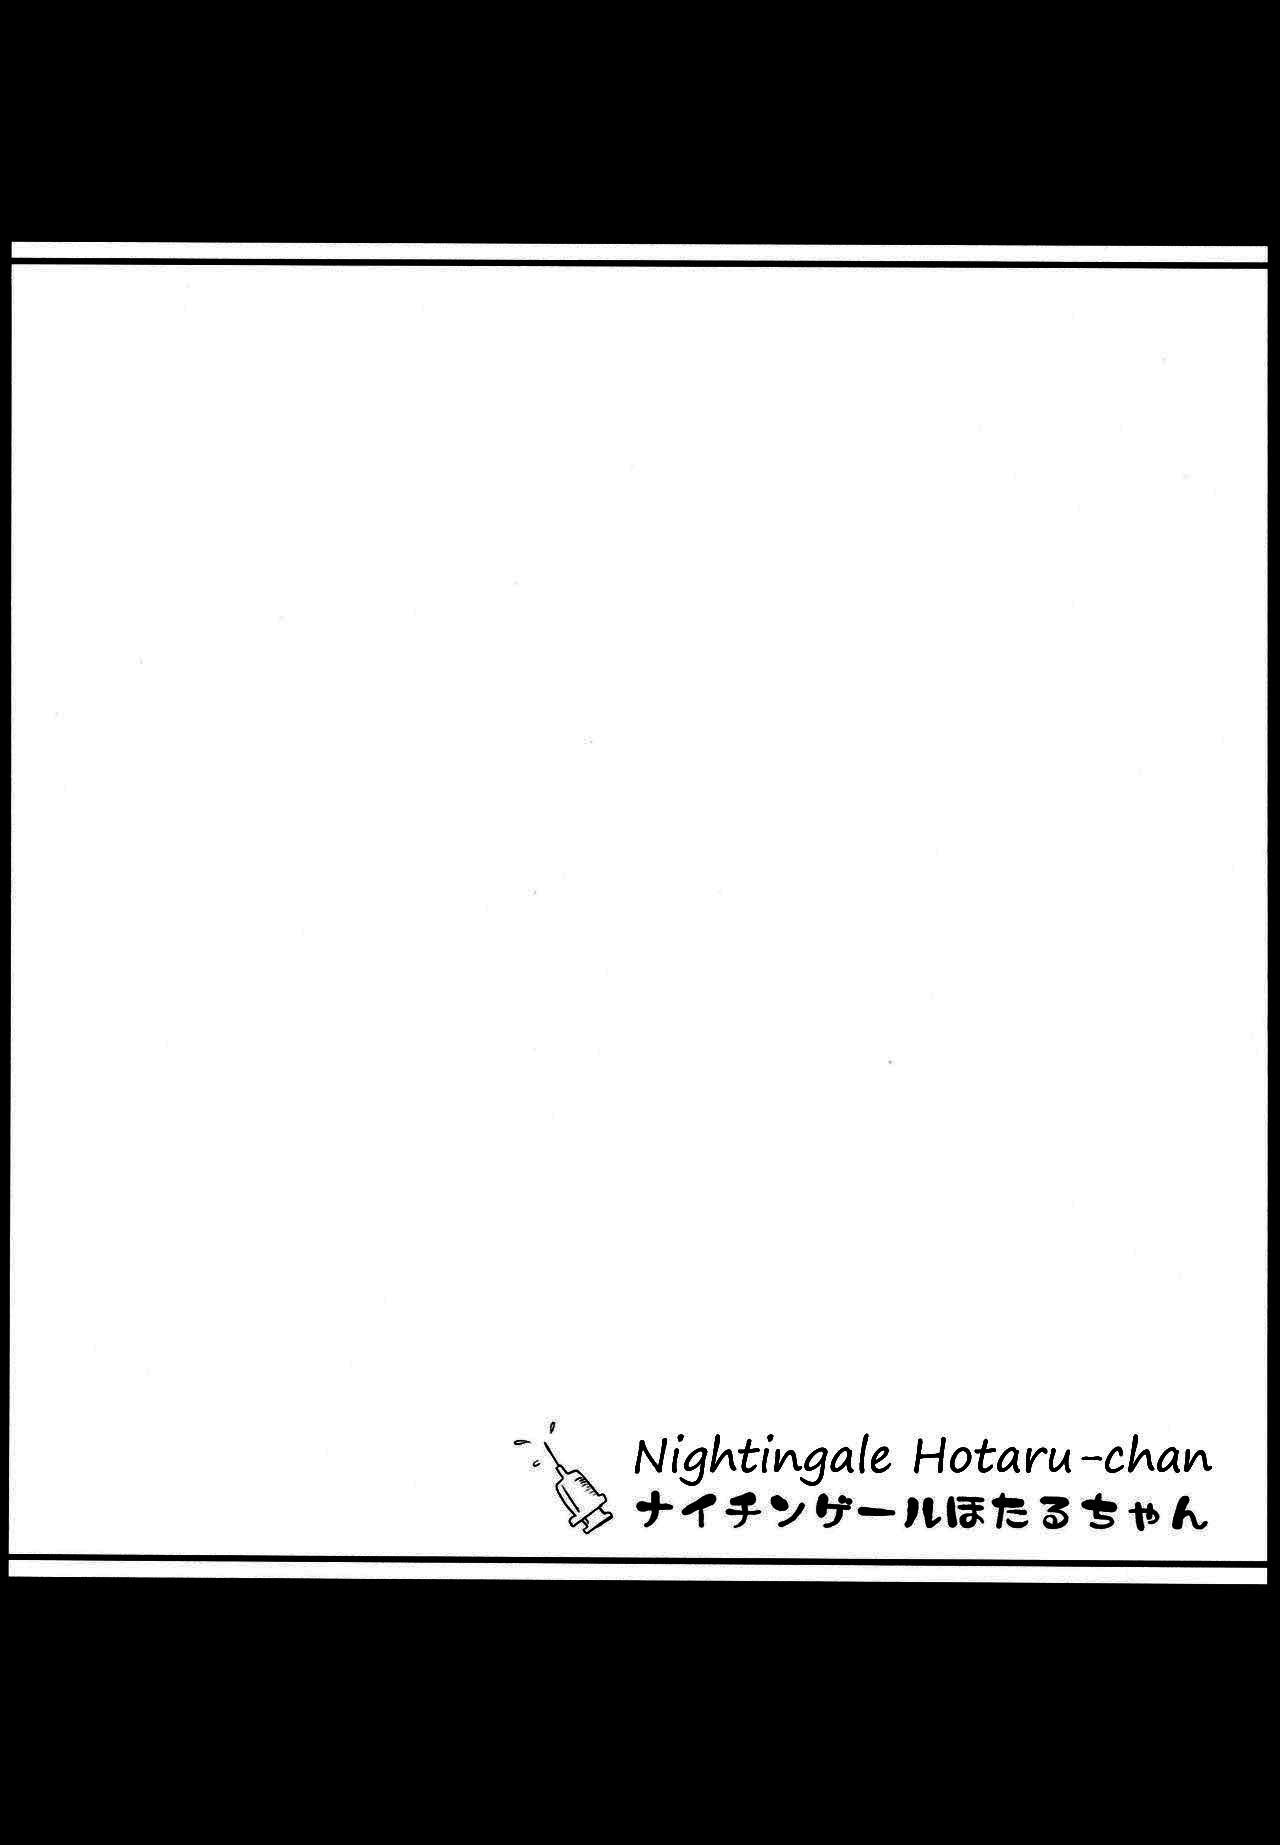 Nightingale Hotaru-chan 2